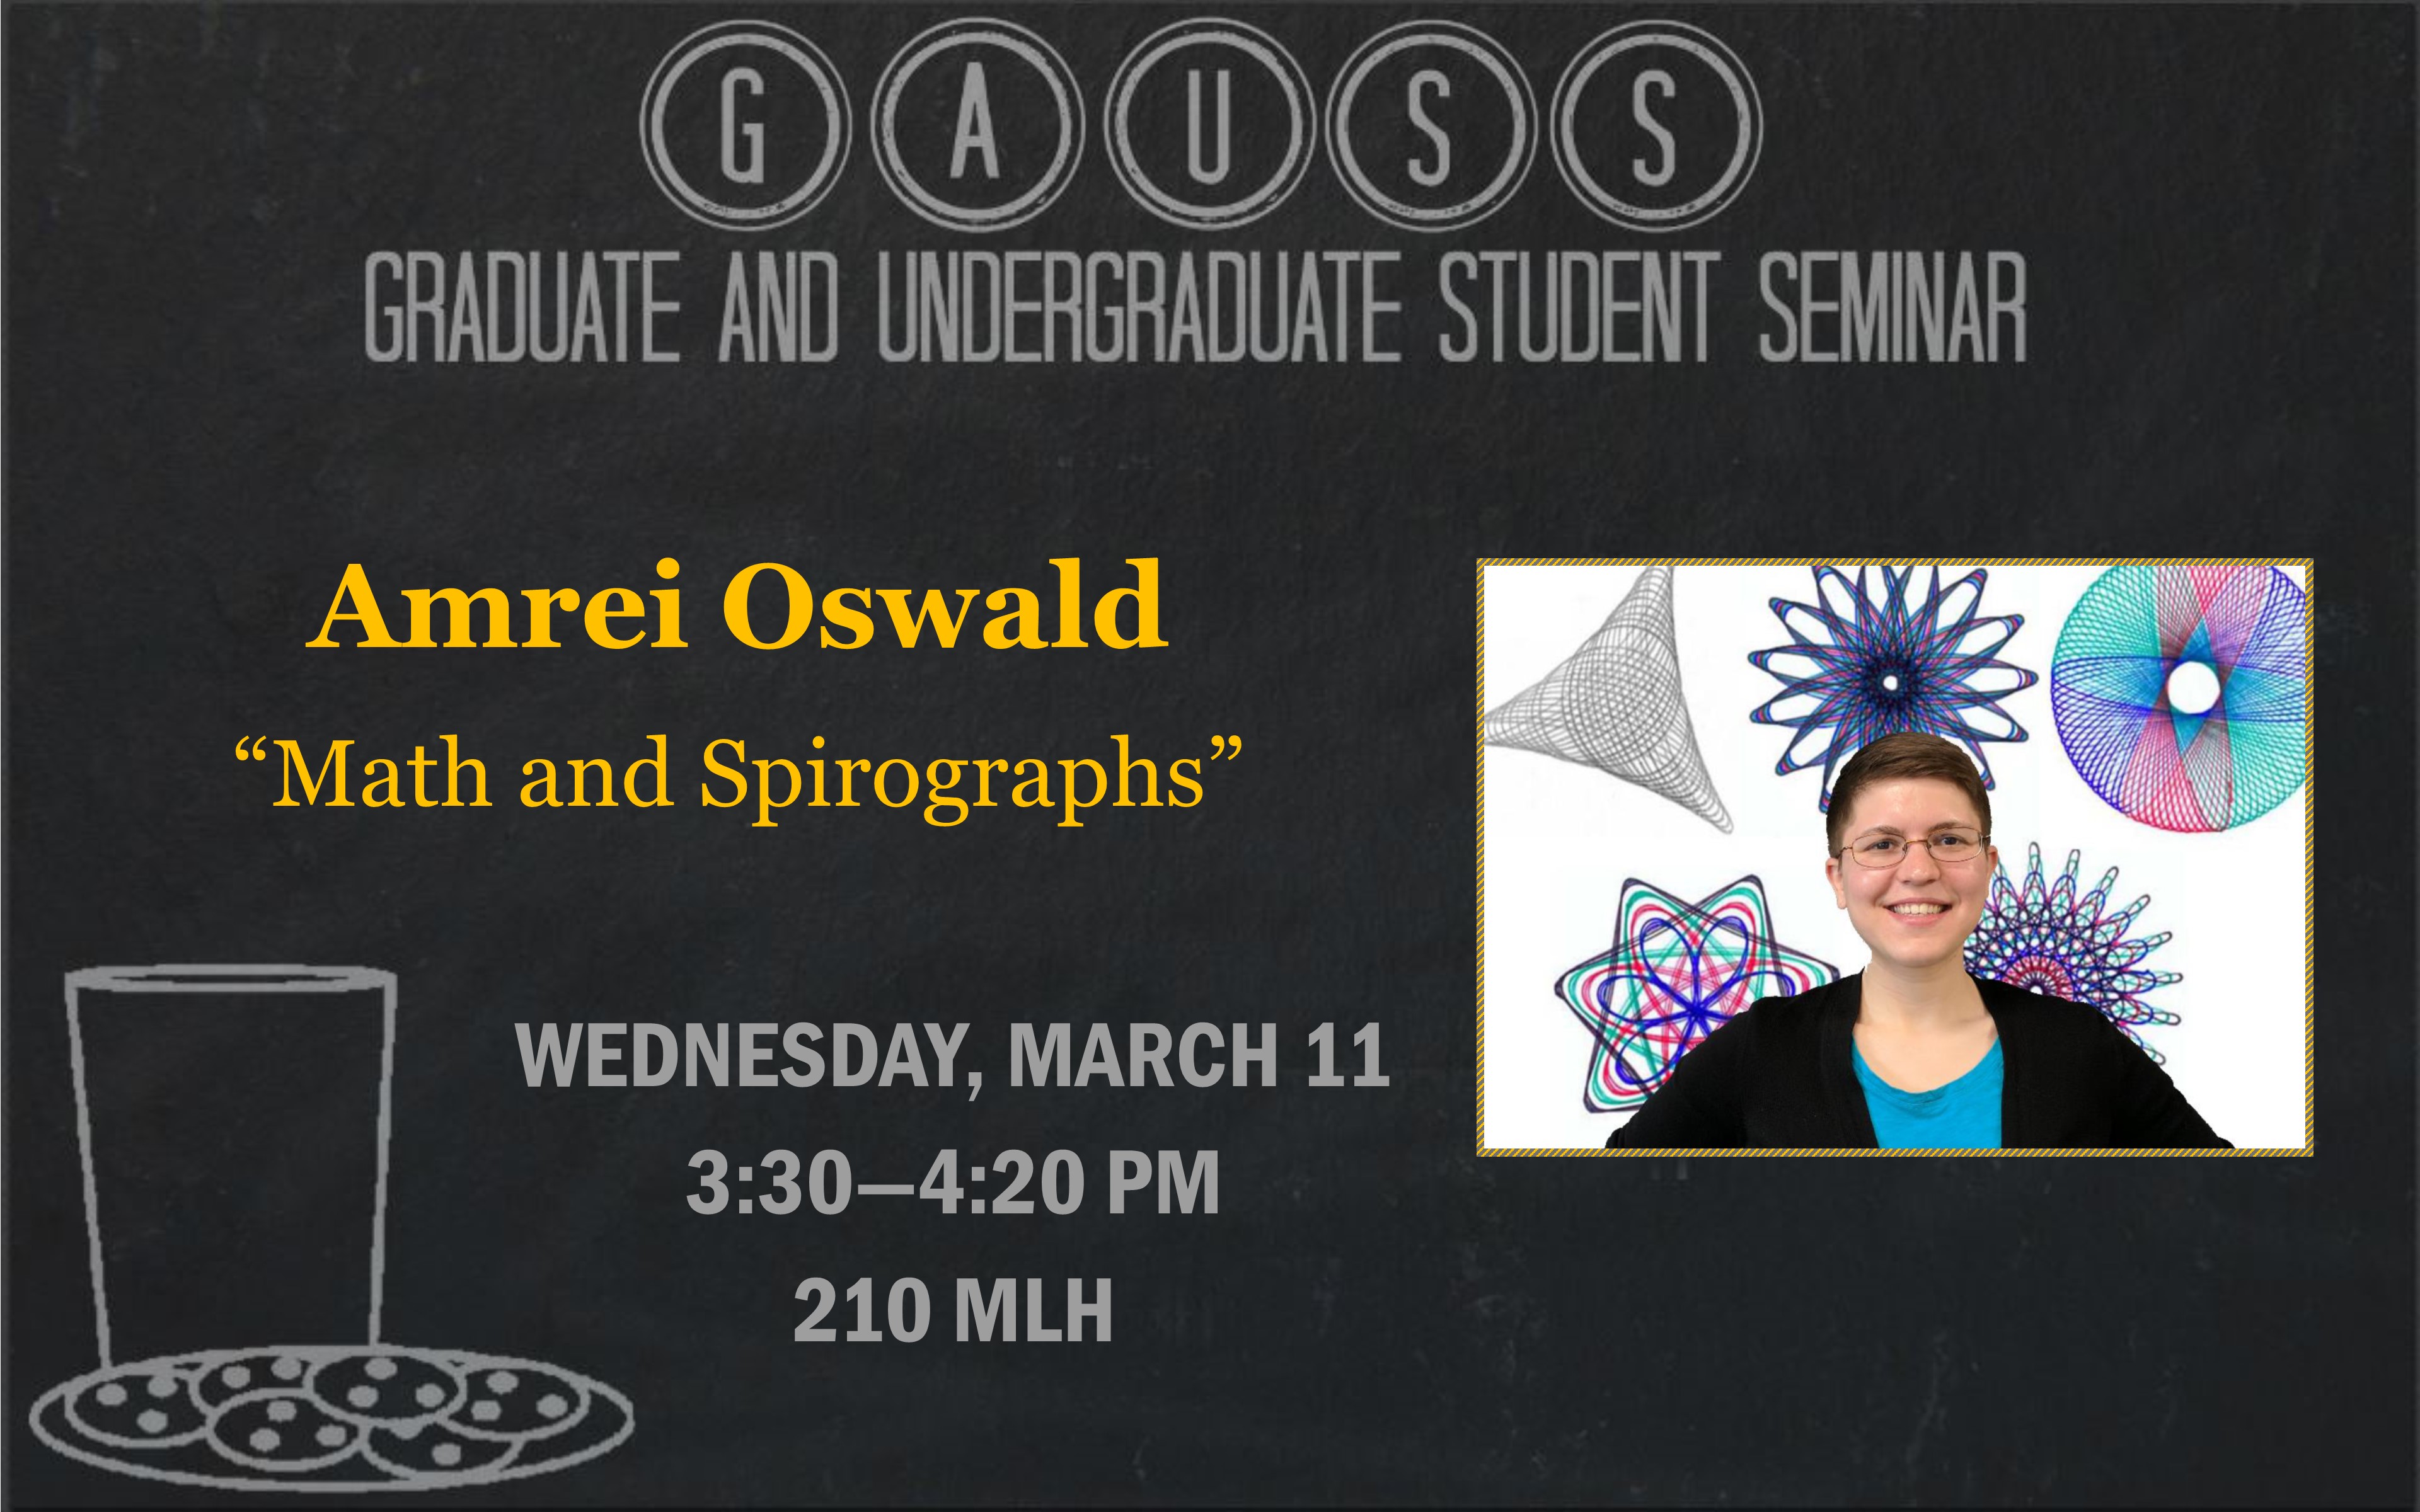 GAUSS Graduate and Undergraduate Student Seminar Amrei Oswald "Math and Spirographs" Wednesday, March 4 3:30 PM 210 MLH